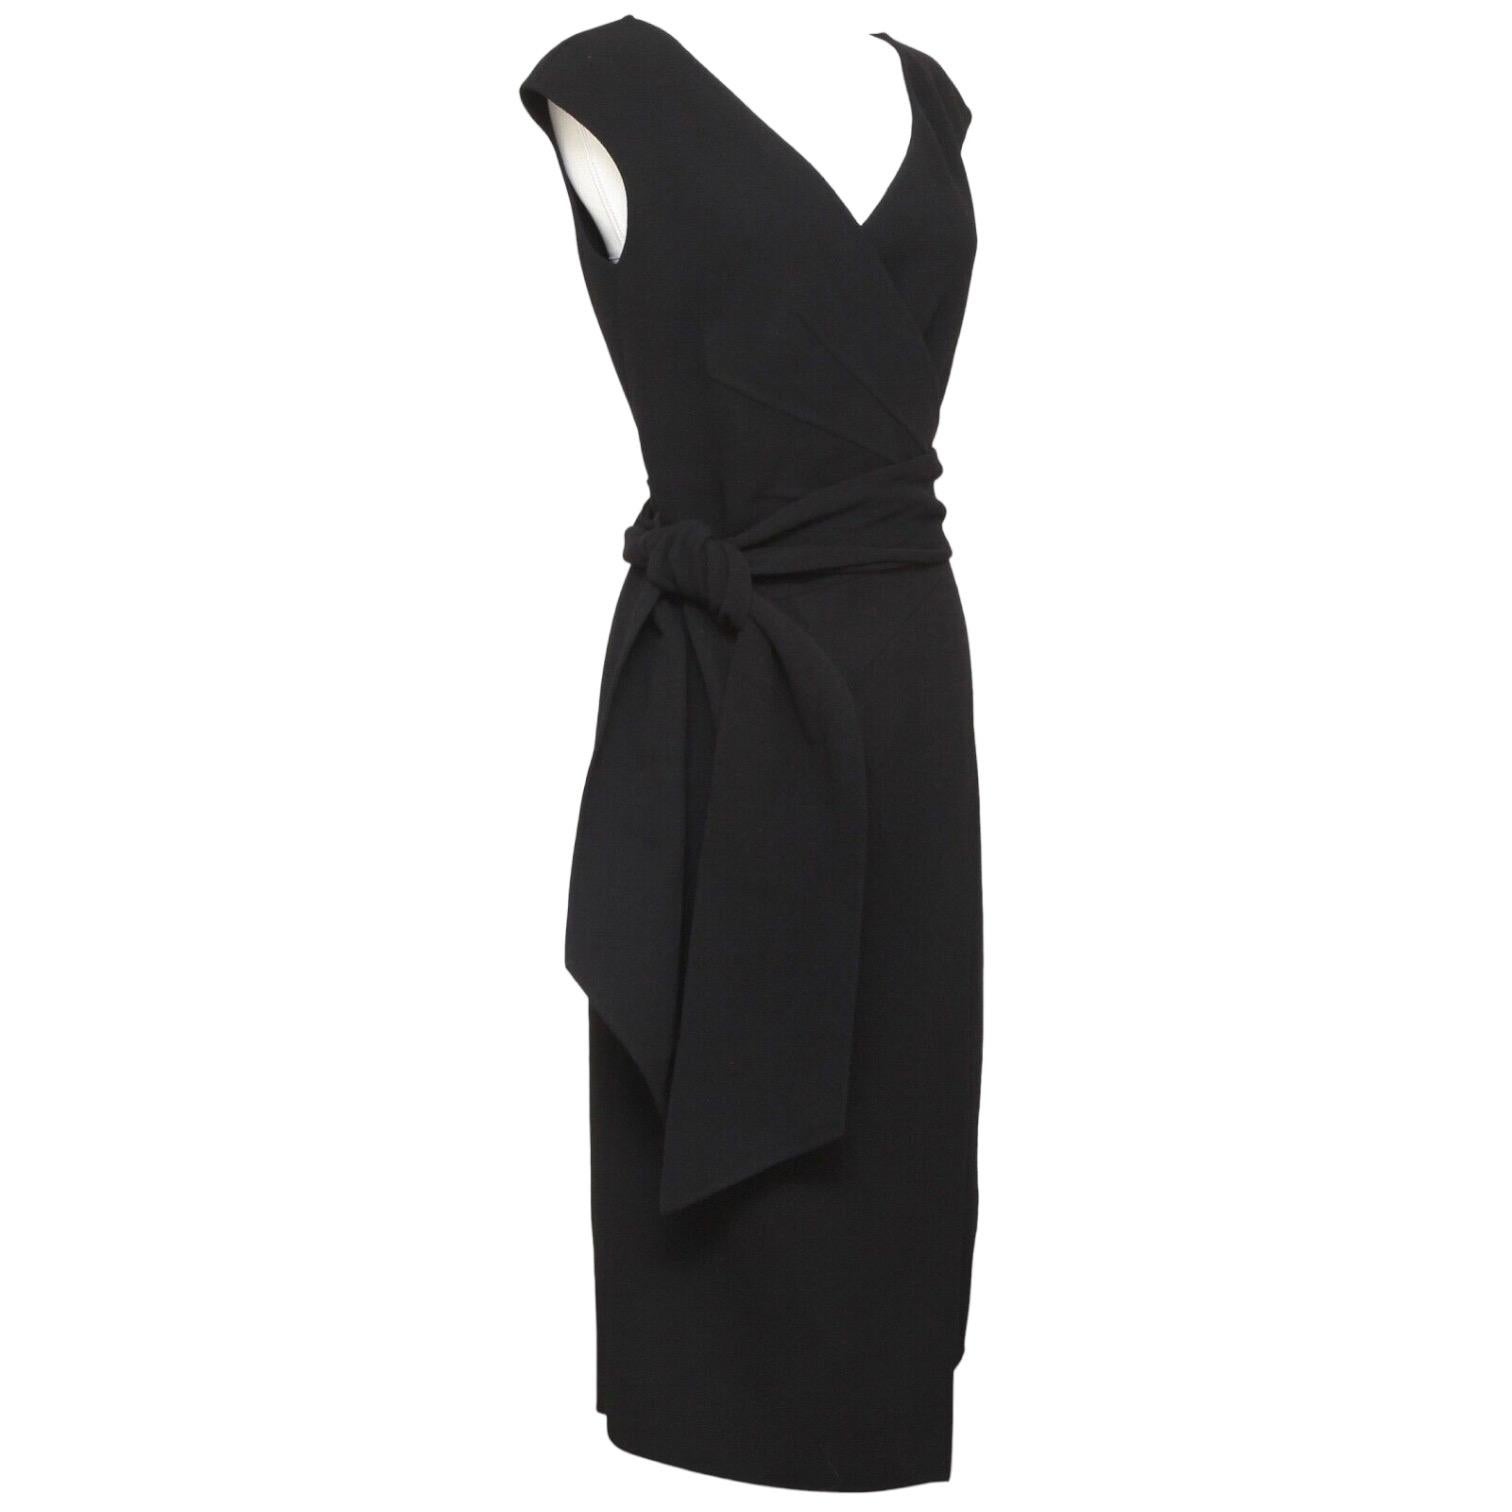 OSCAR DE LA RENTA Dress Black Sleeveless Wrap Knit Sz 8 NWT $2190 In New Condition In Hollywood, FL